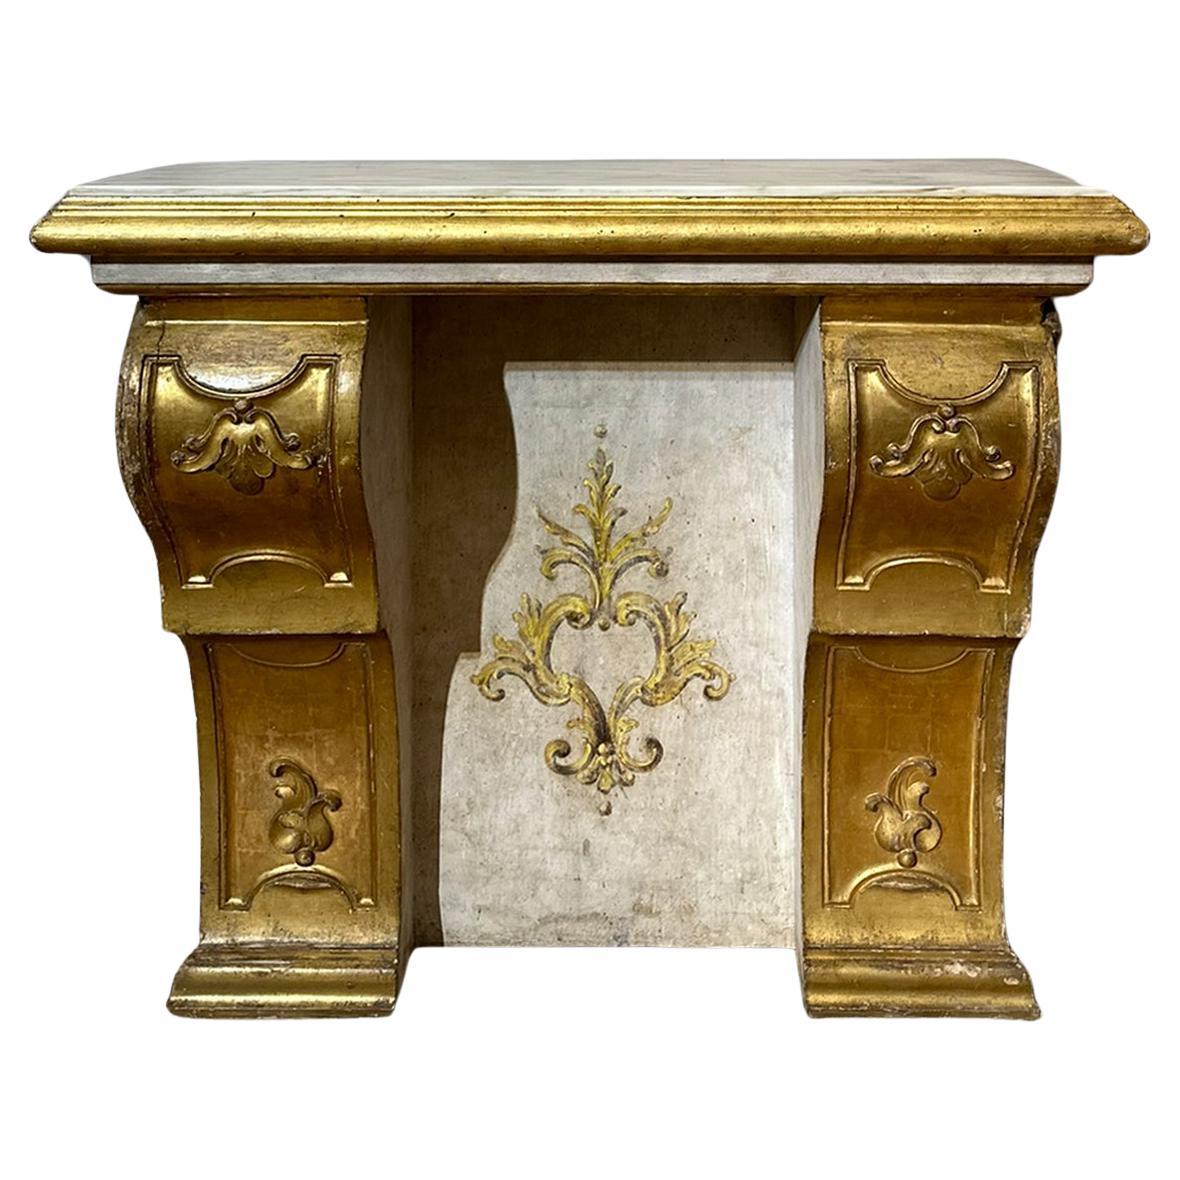 goldene Altarkonsole aus dem 18. Jahrhundert